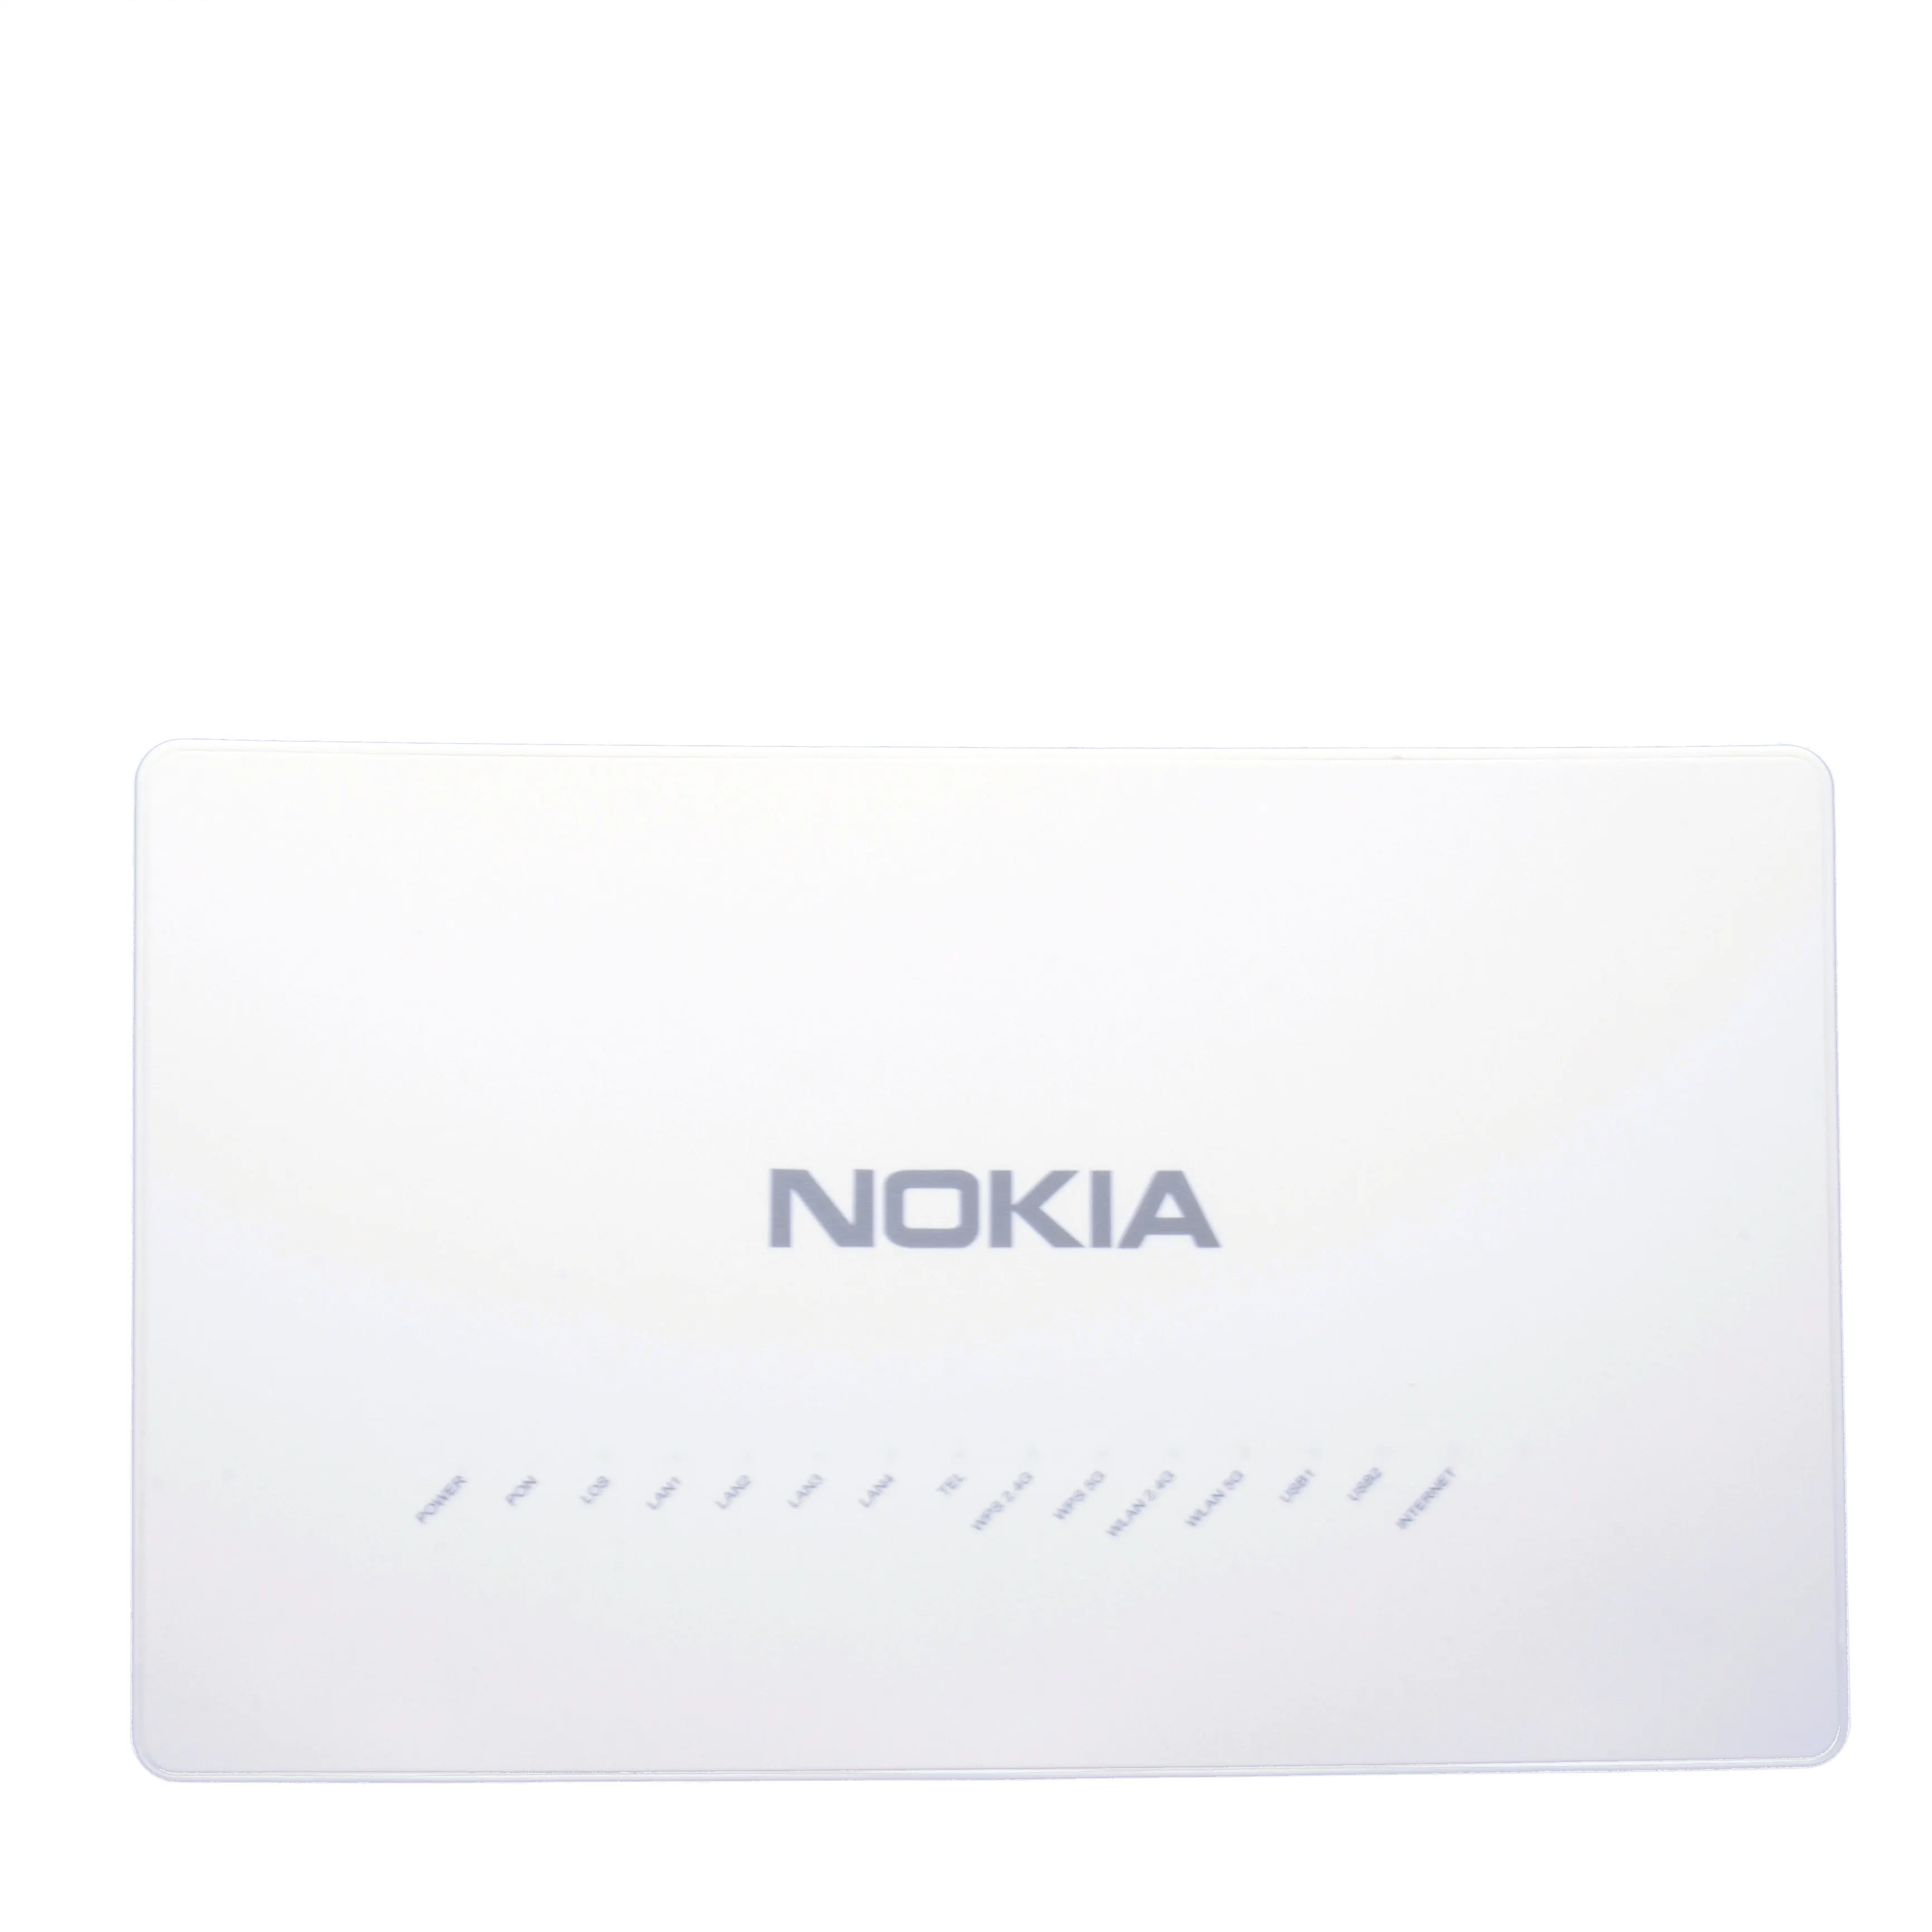 Nokia 4GE Dual Band GPON ONU Wifi G-140W-C Fiber Optic router ont onu 4GE+2.4G/5G AC WiFi+1USB Without Antennas